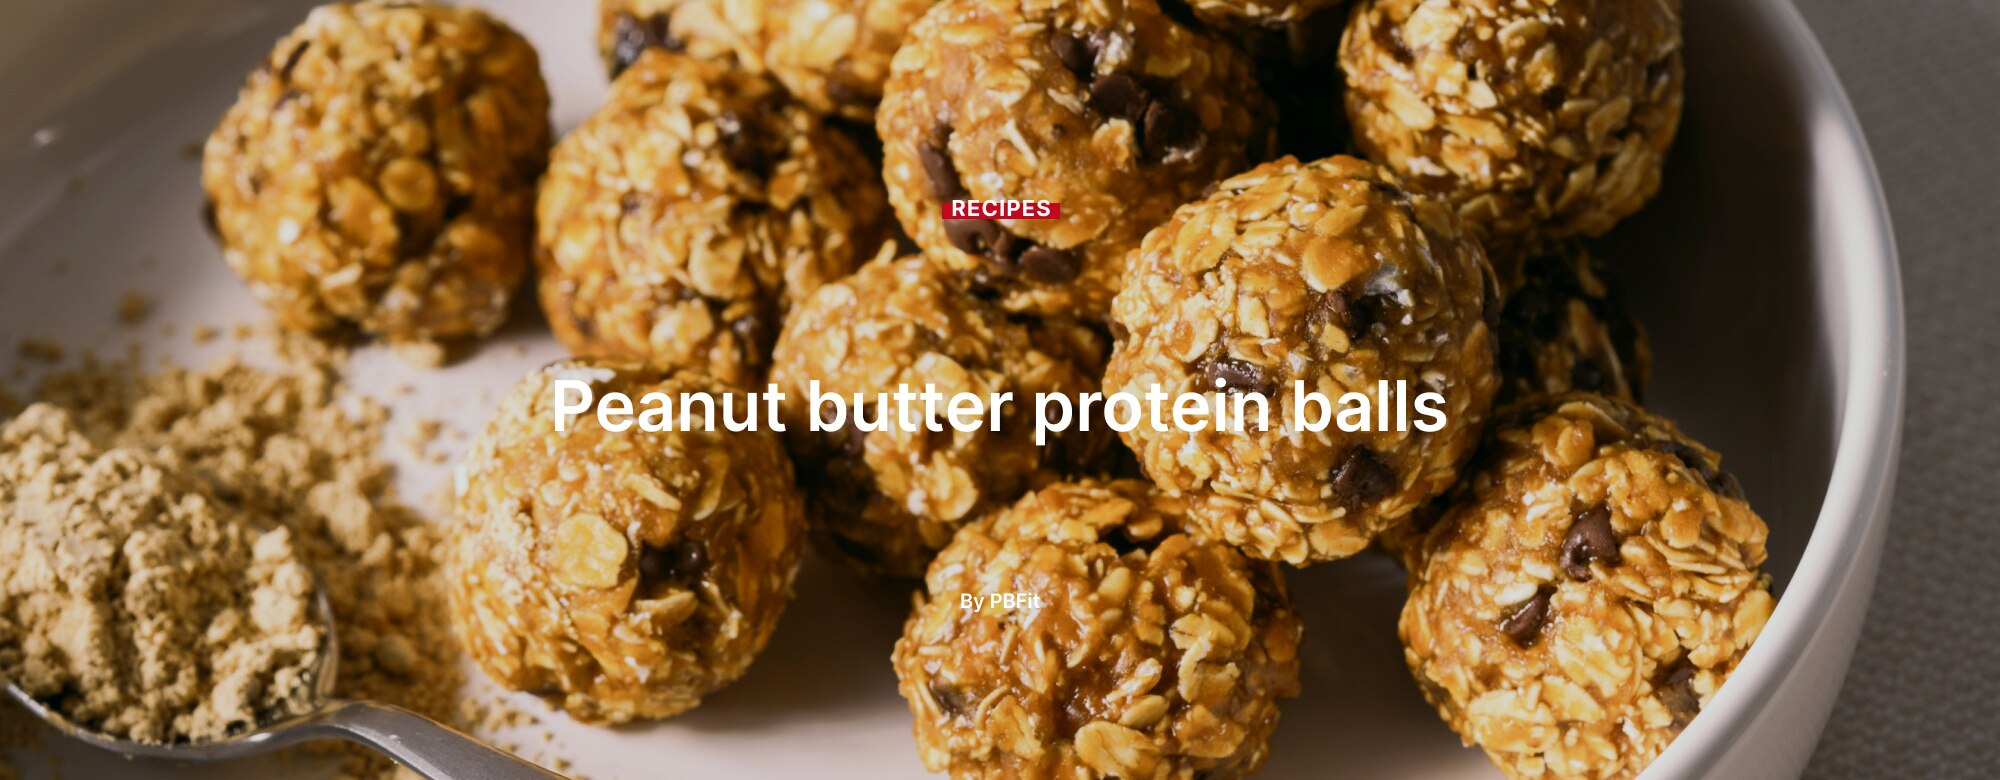 Peanut butter protein balls